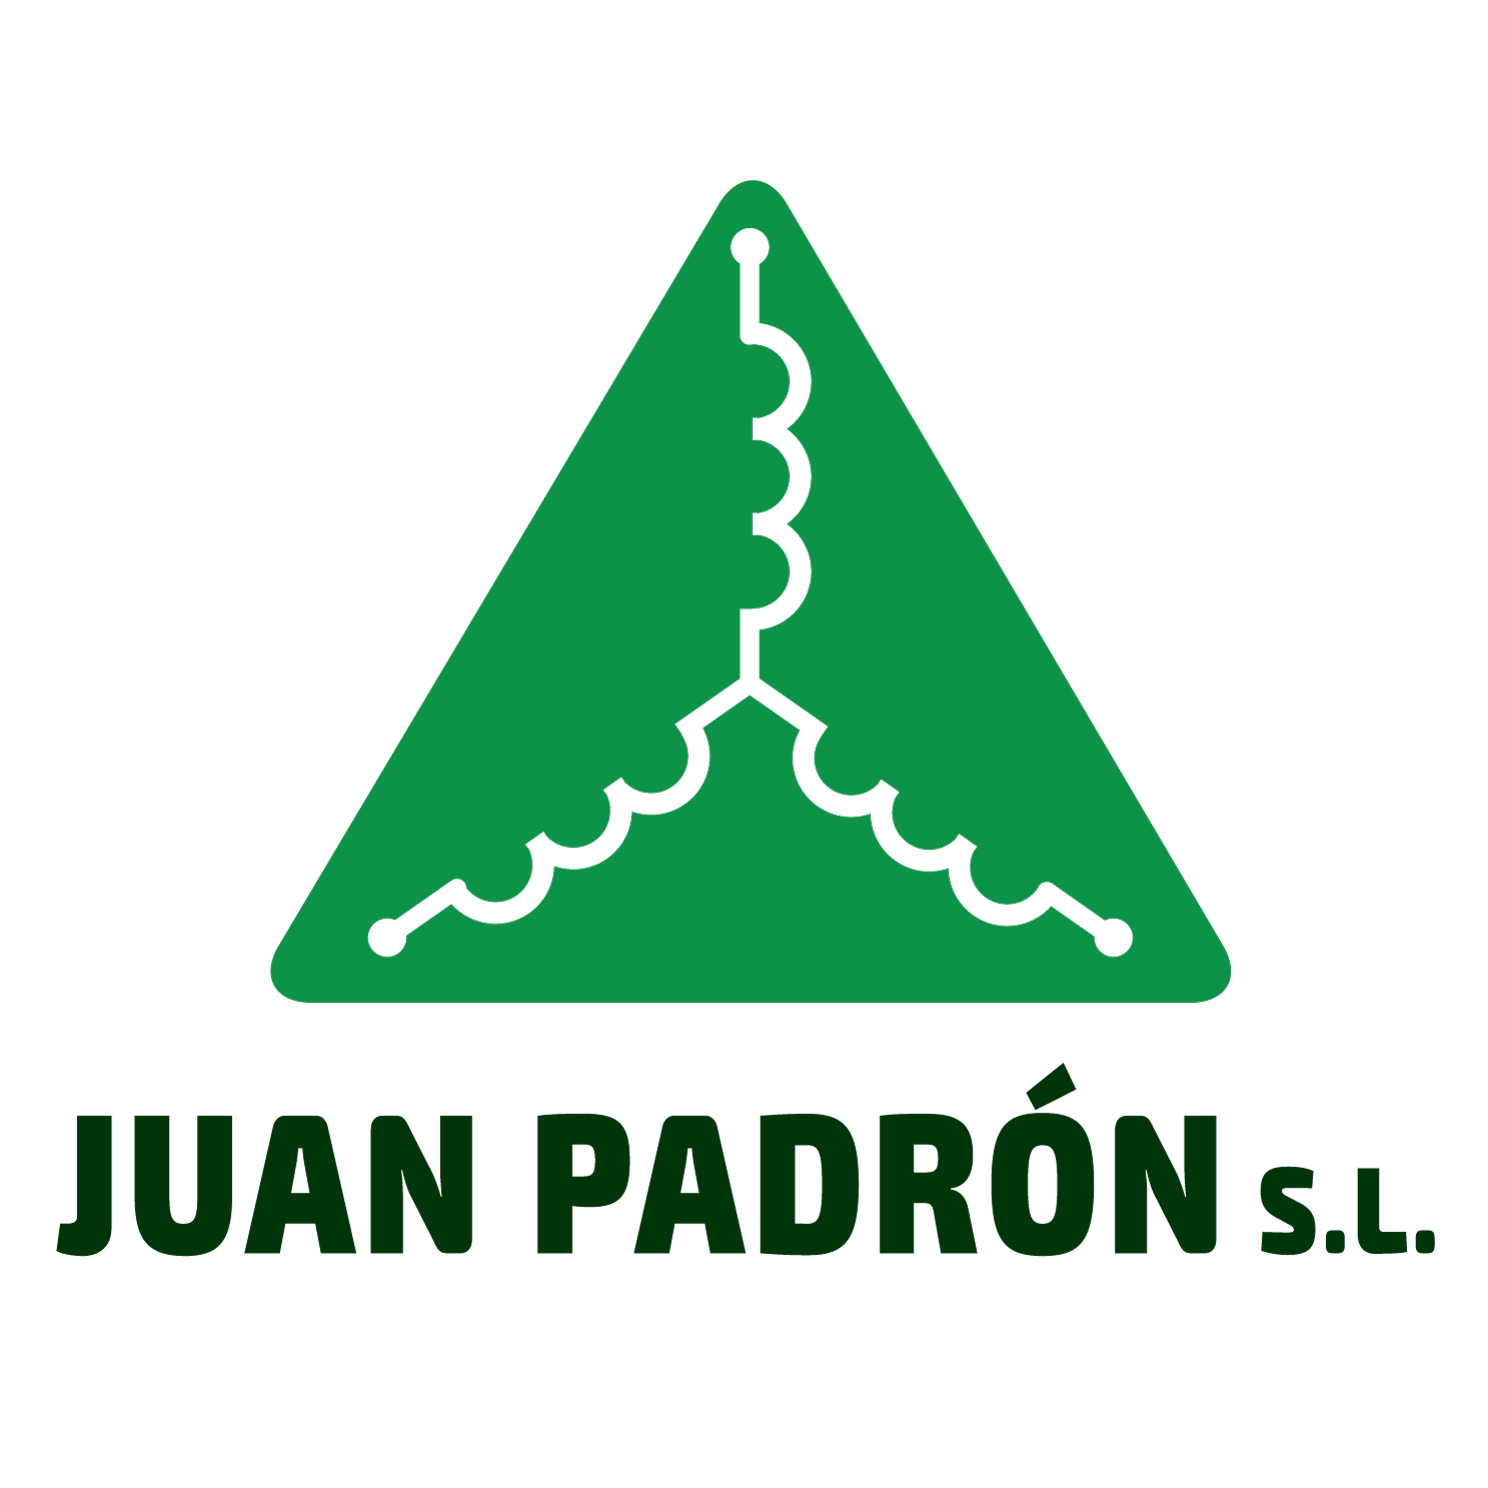 Juan Padrón S.L.